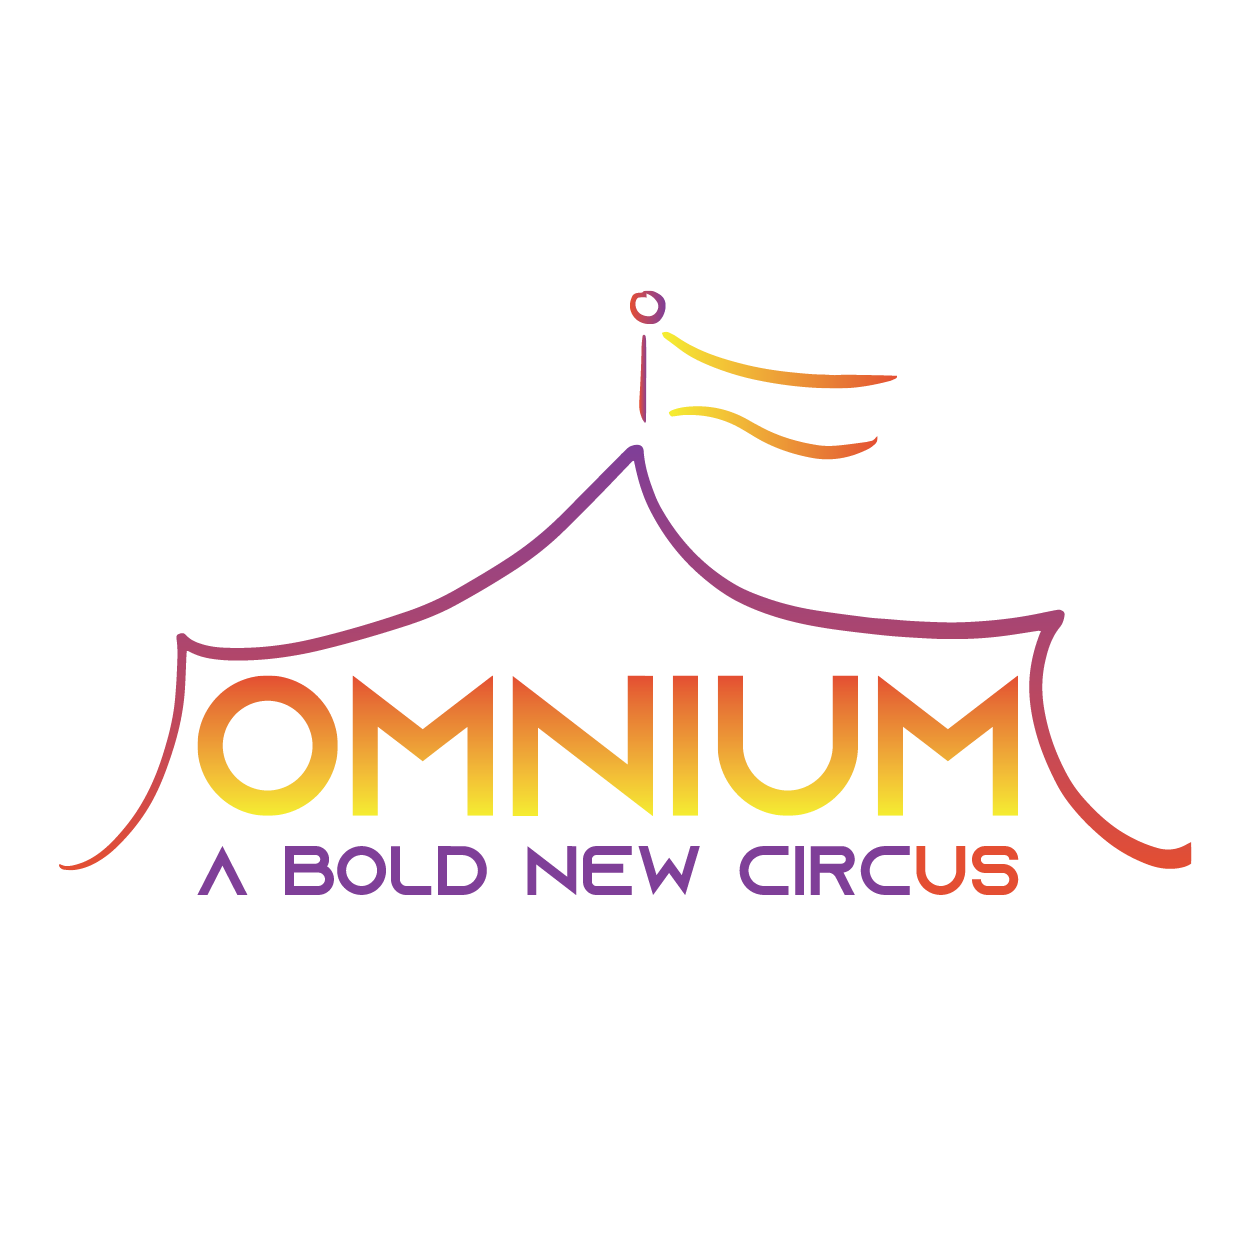 Omnium: A Bold New Circus